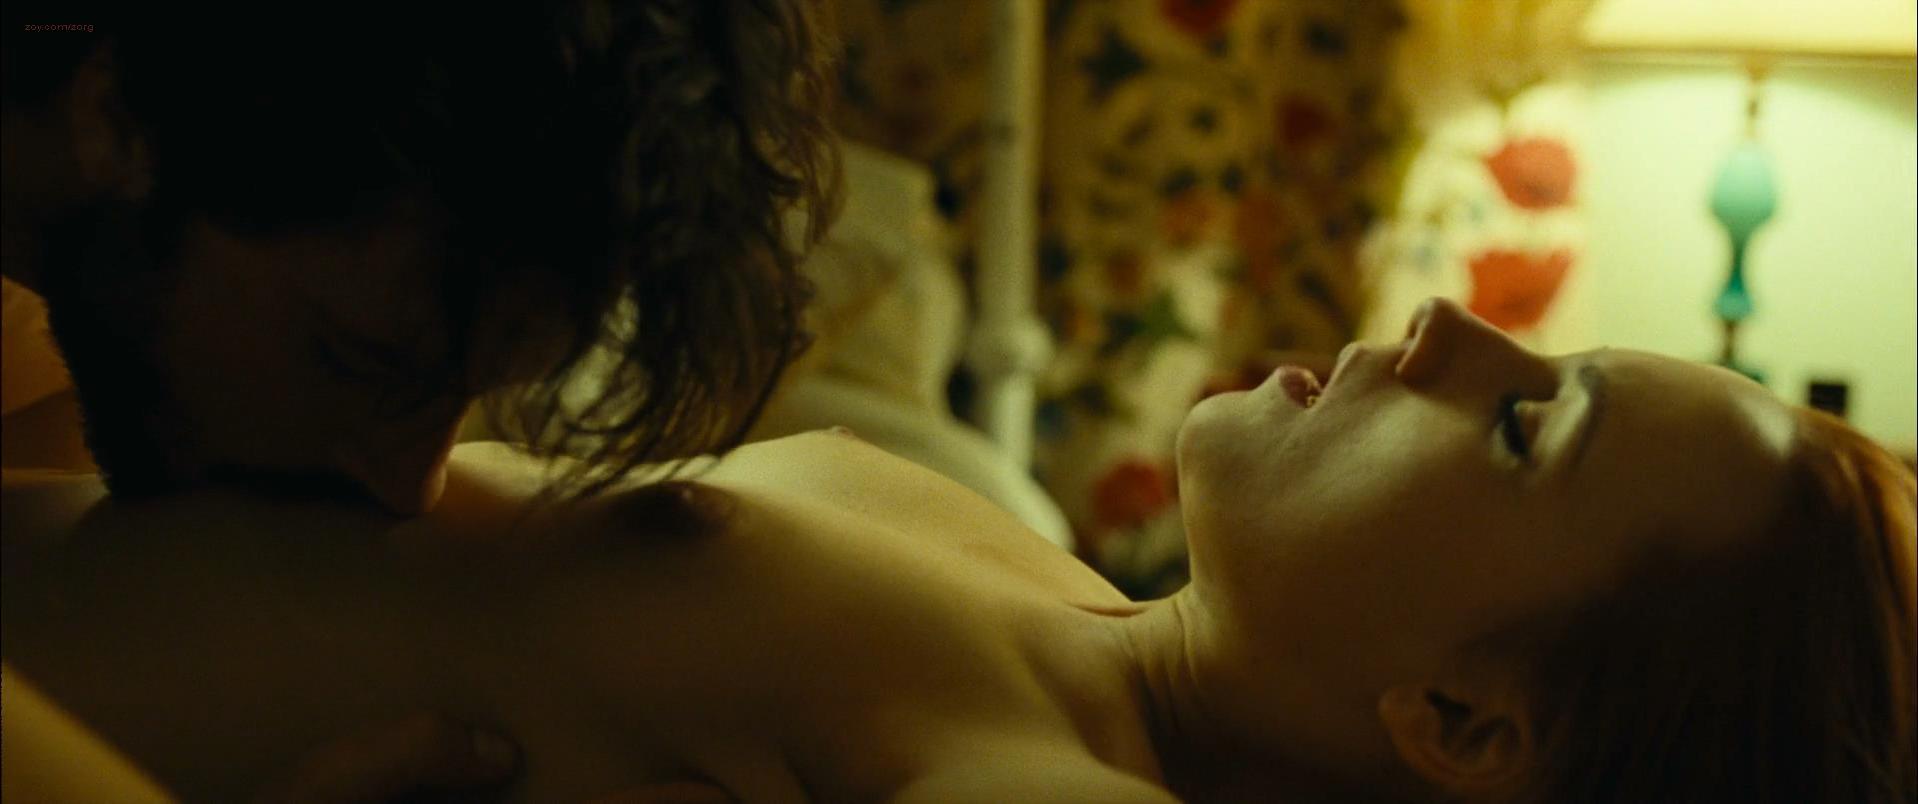 Aura Garrido nude - The Body (2012)